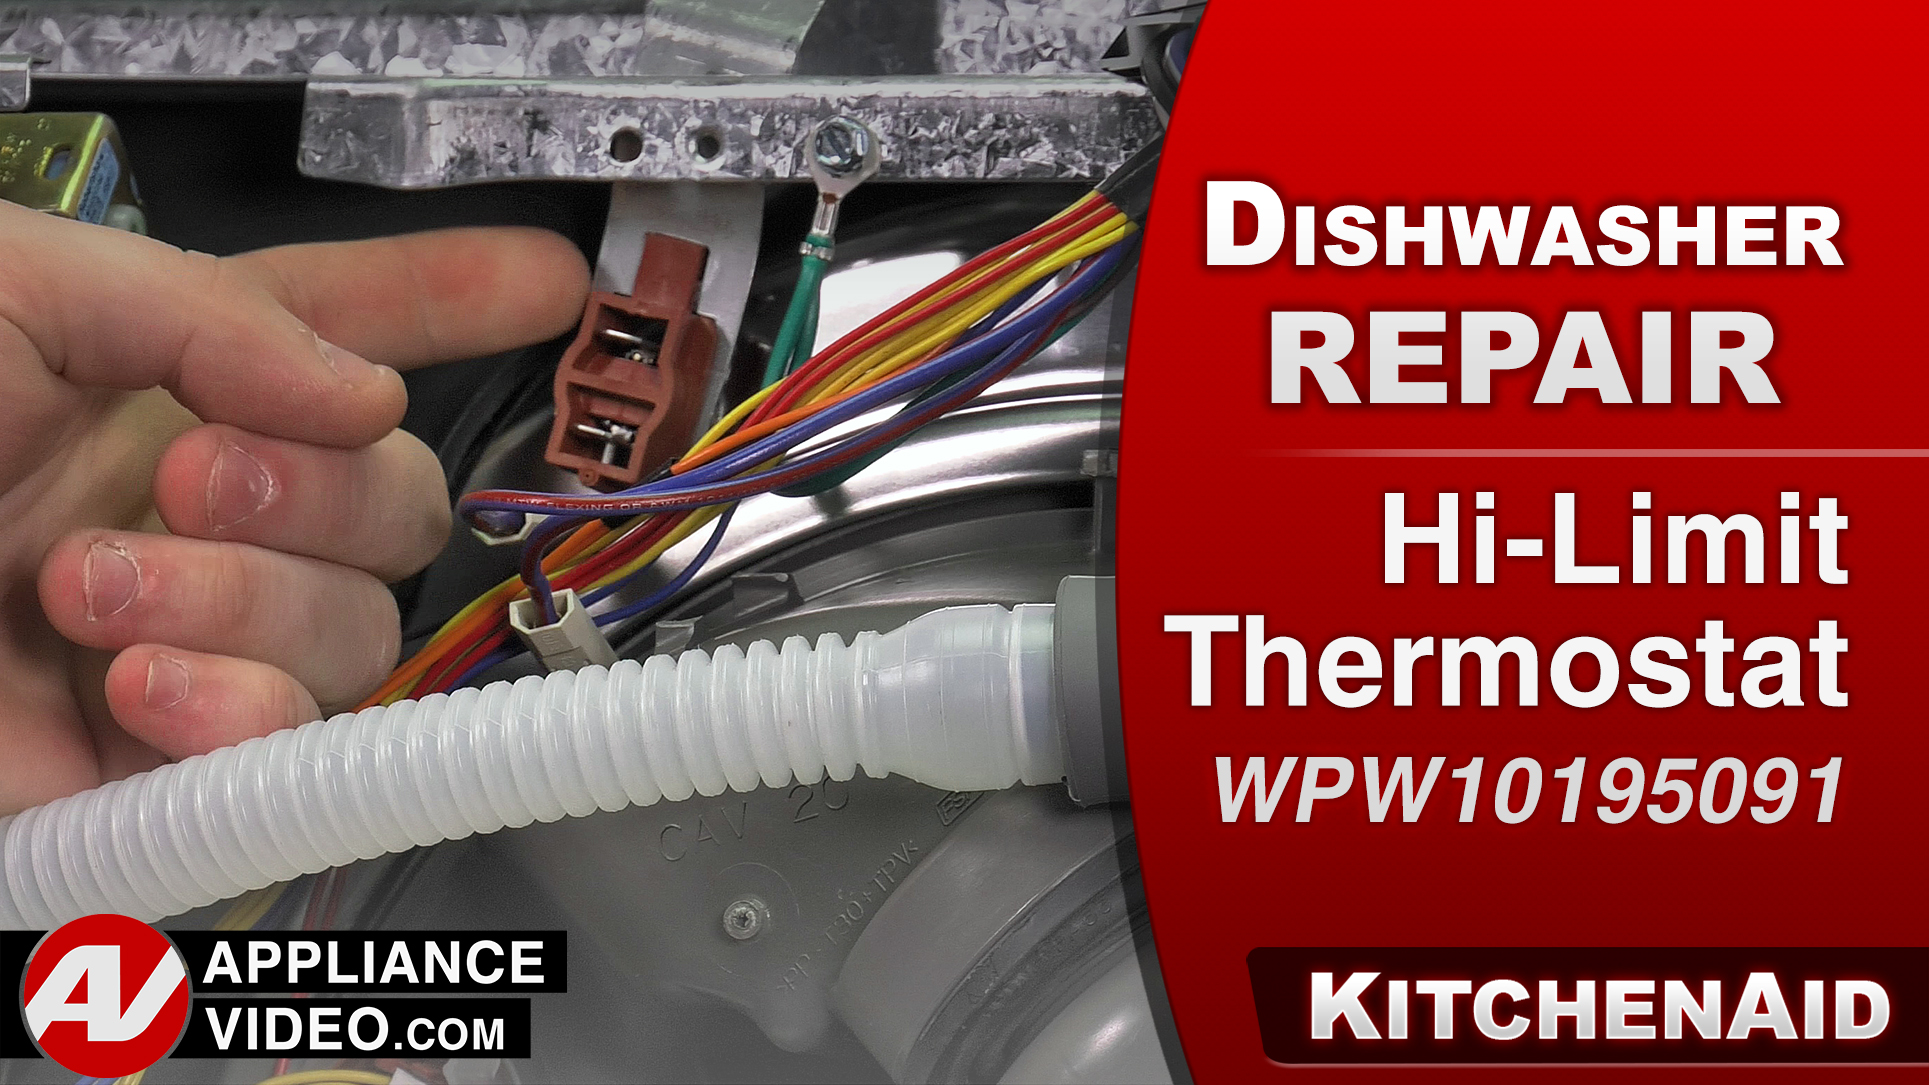 KitchenAid KDTM354ESS3 Dishwasher – No power to the unit – High Limit Thermostat